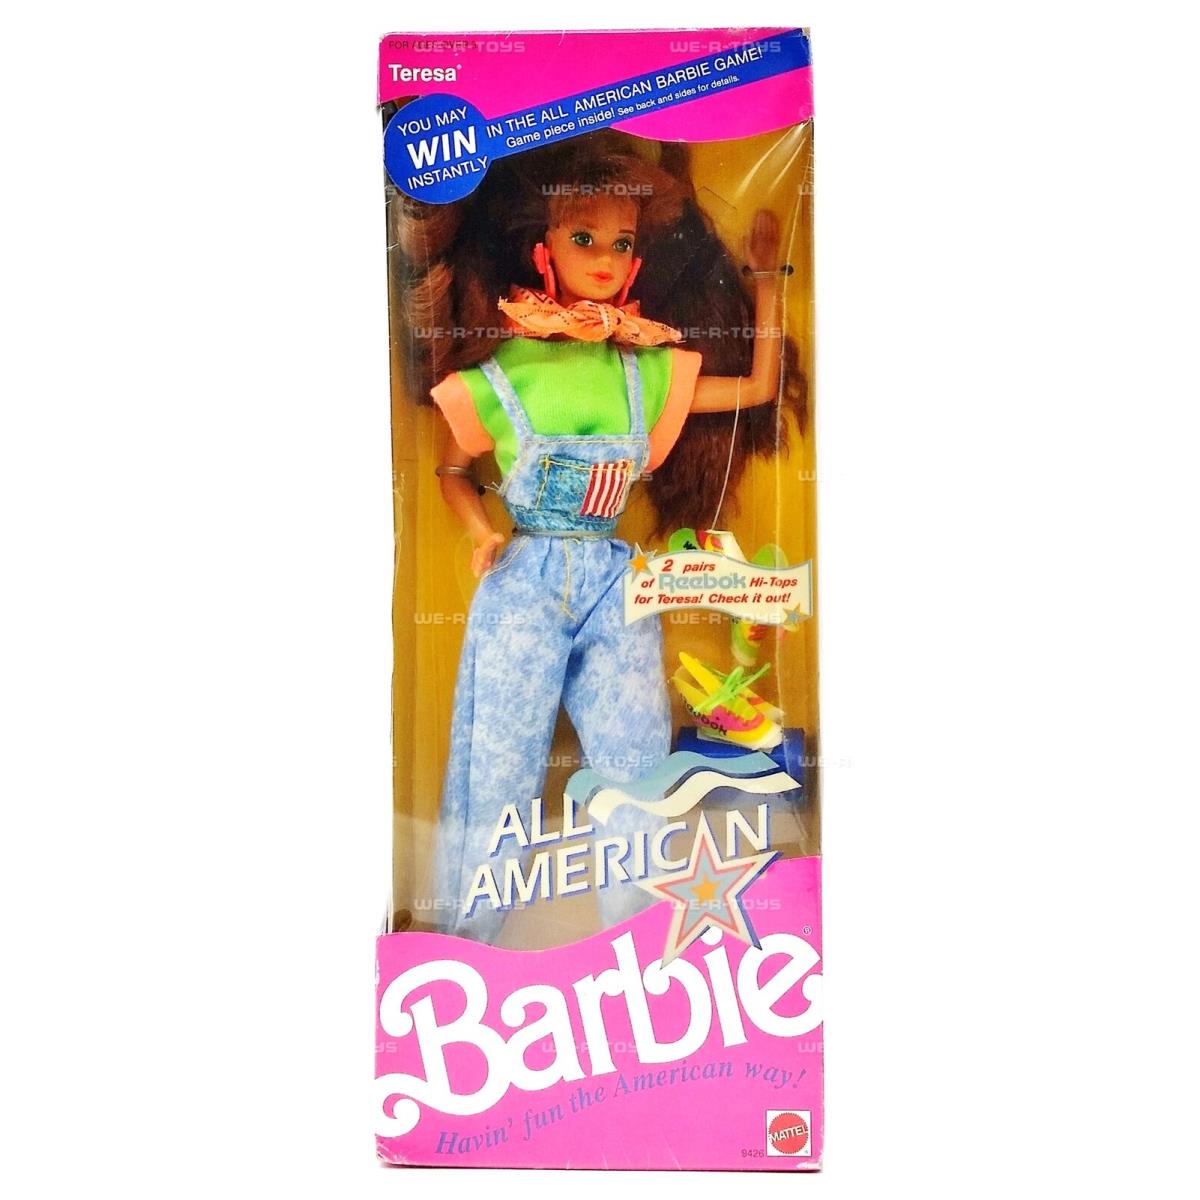 Barbie All American Teresa Doll Reebok 1990 Mattel No. 9426 Nrfb B